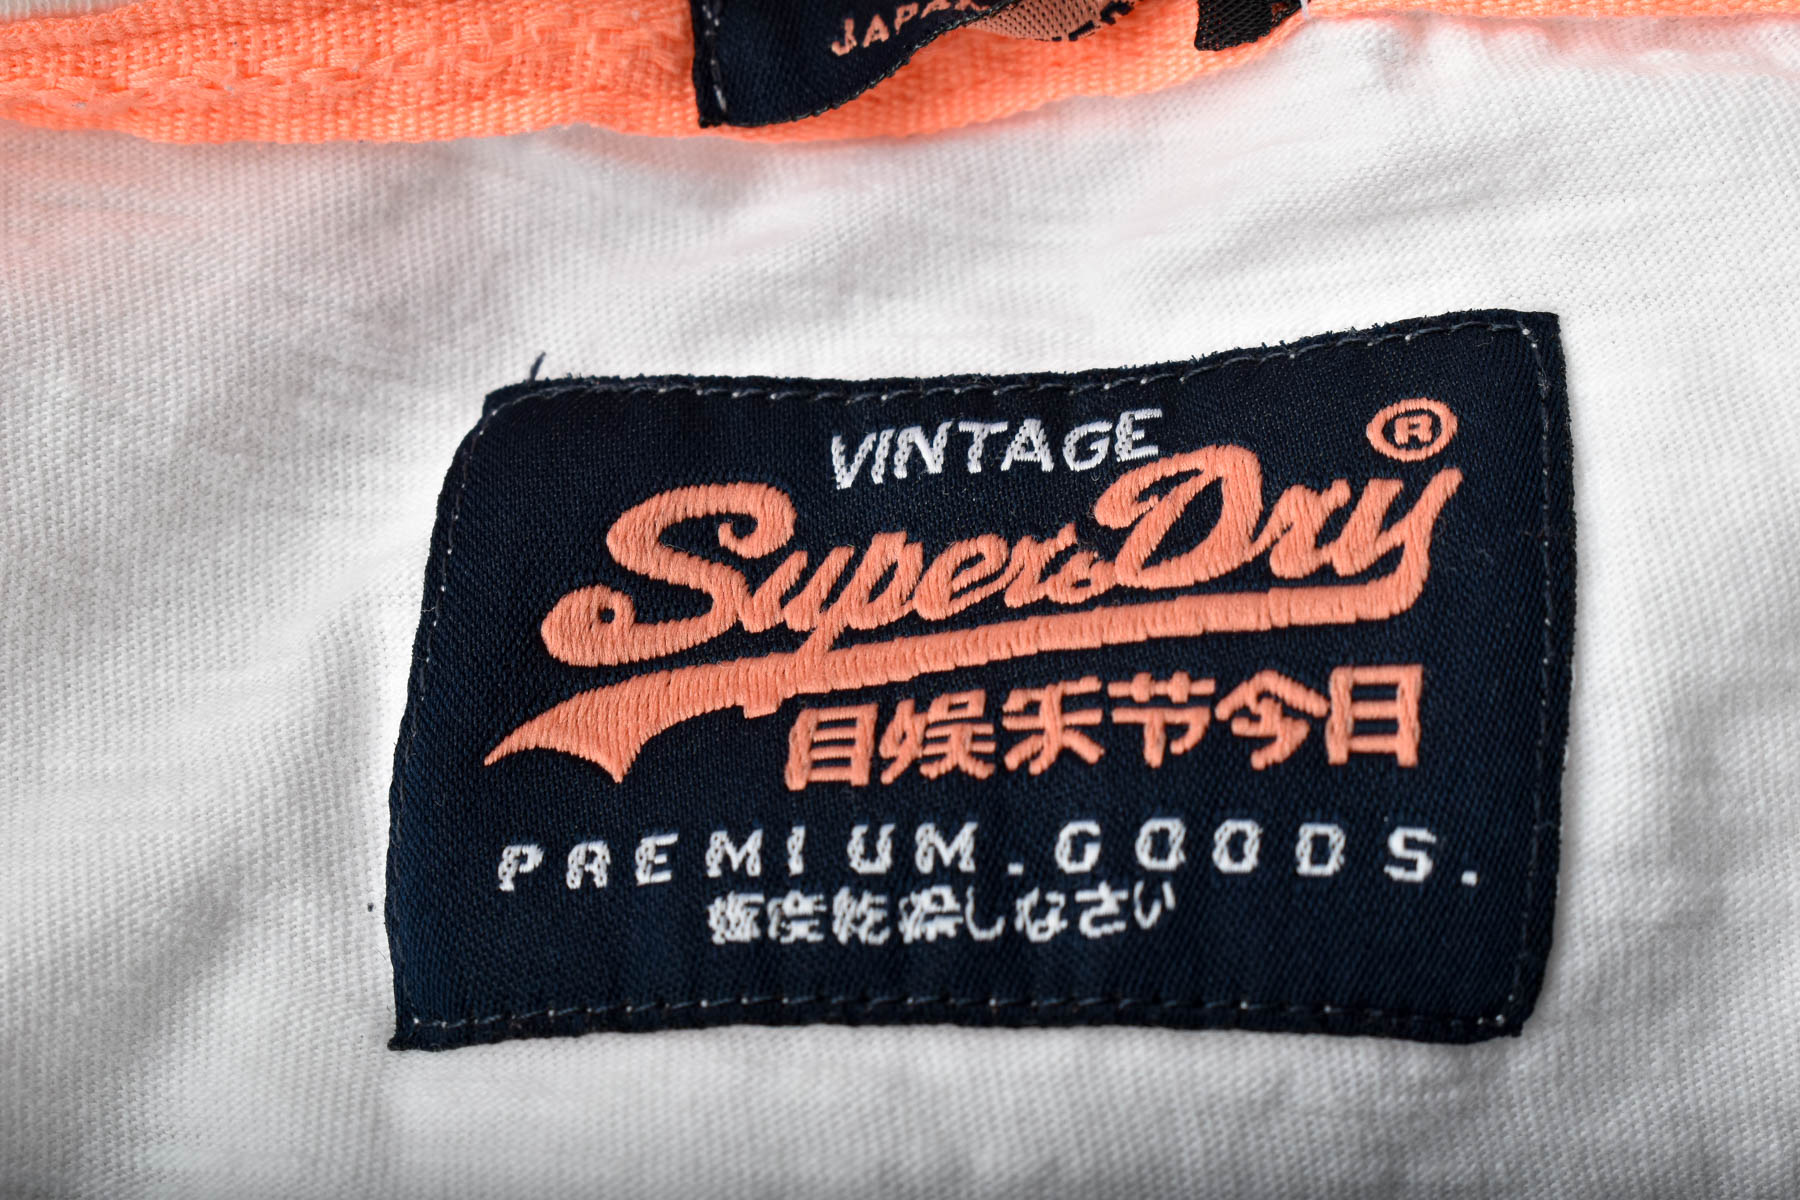 Bluza de damă - SuperDry - 2